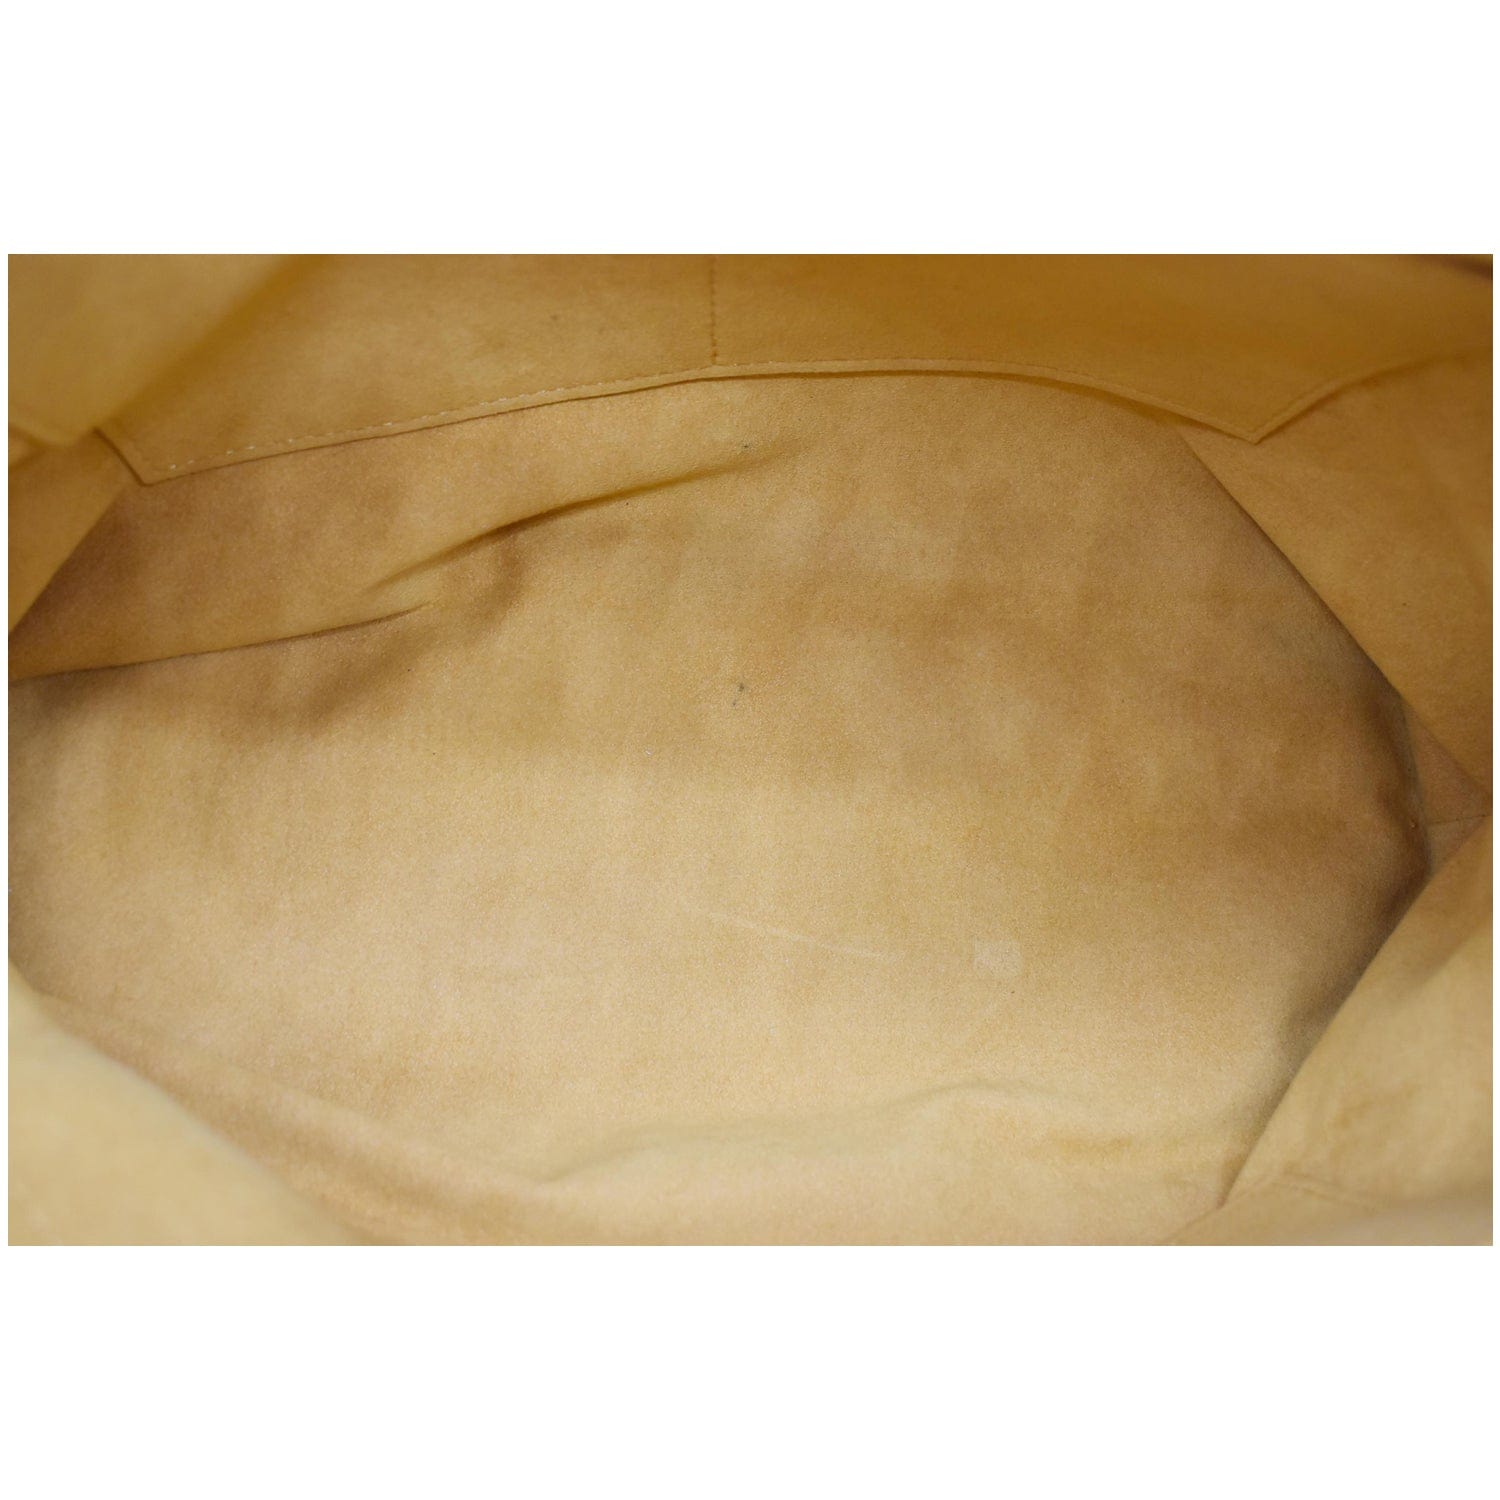 Louis Vuitton Pallas MM Monogram Canvas & Brown Leather Tote Shoulder –  Debsluxurycloset